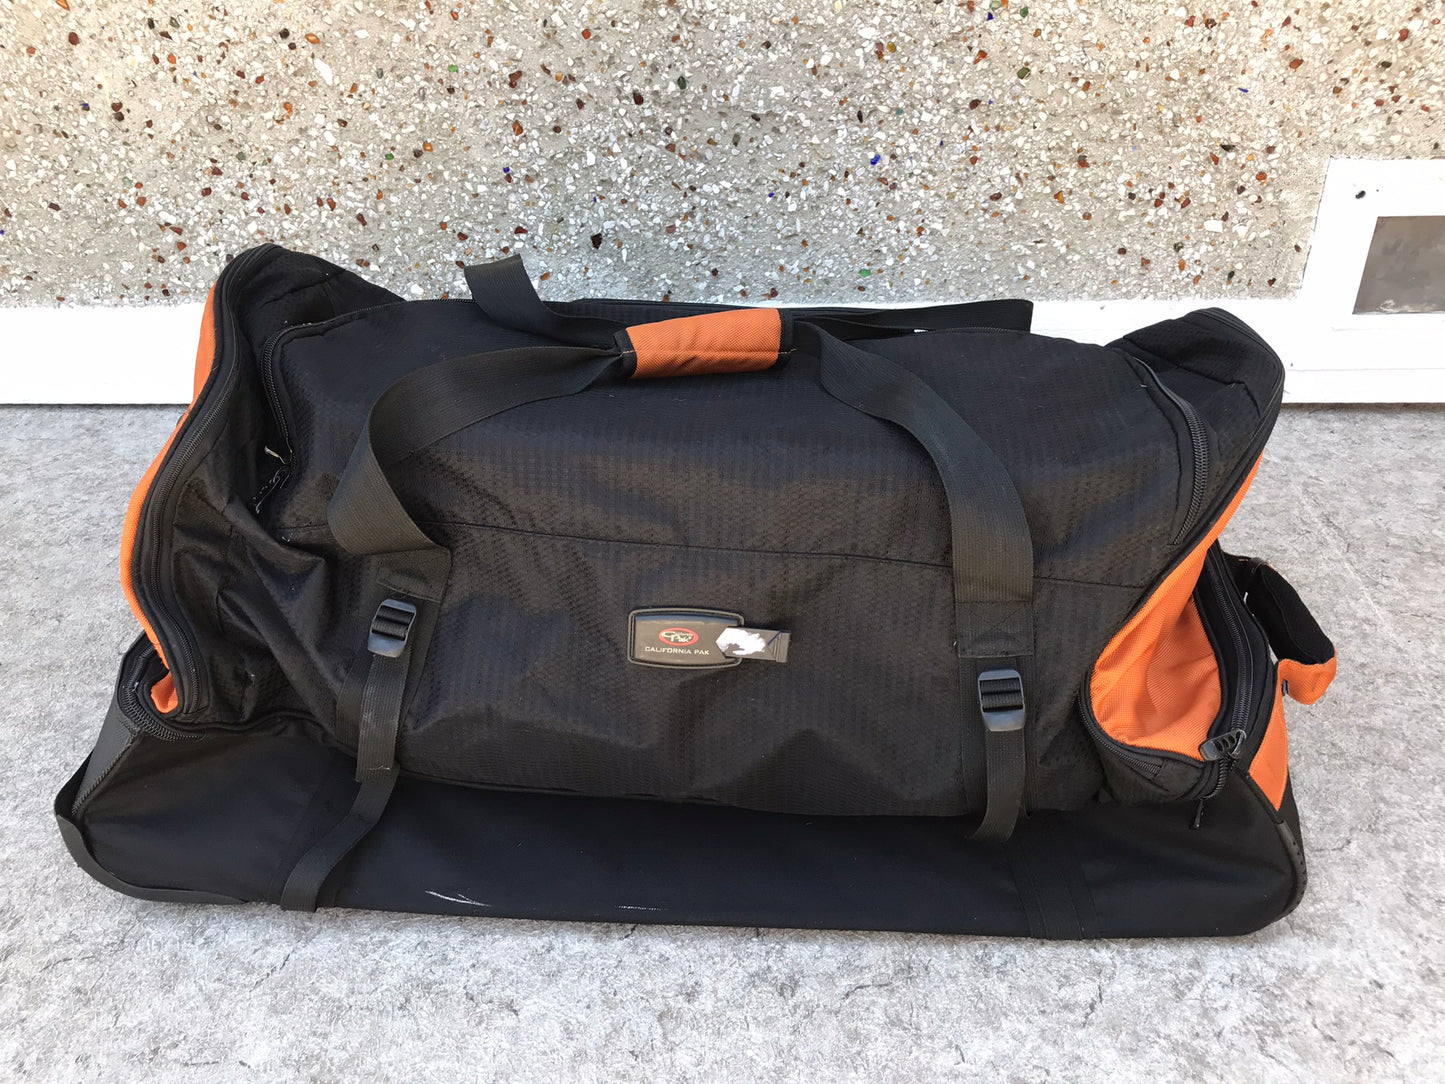 Hockey Bag DufflevTravel Large Sports Bag California Pack Black Tangerine On Wheels Minor Wear